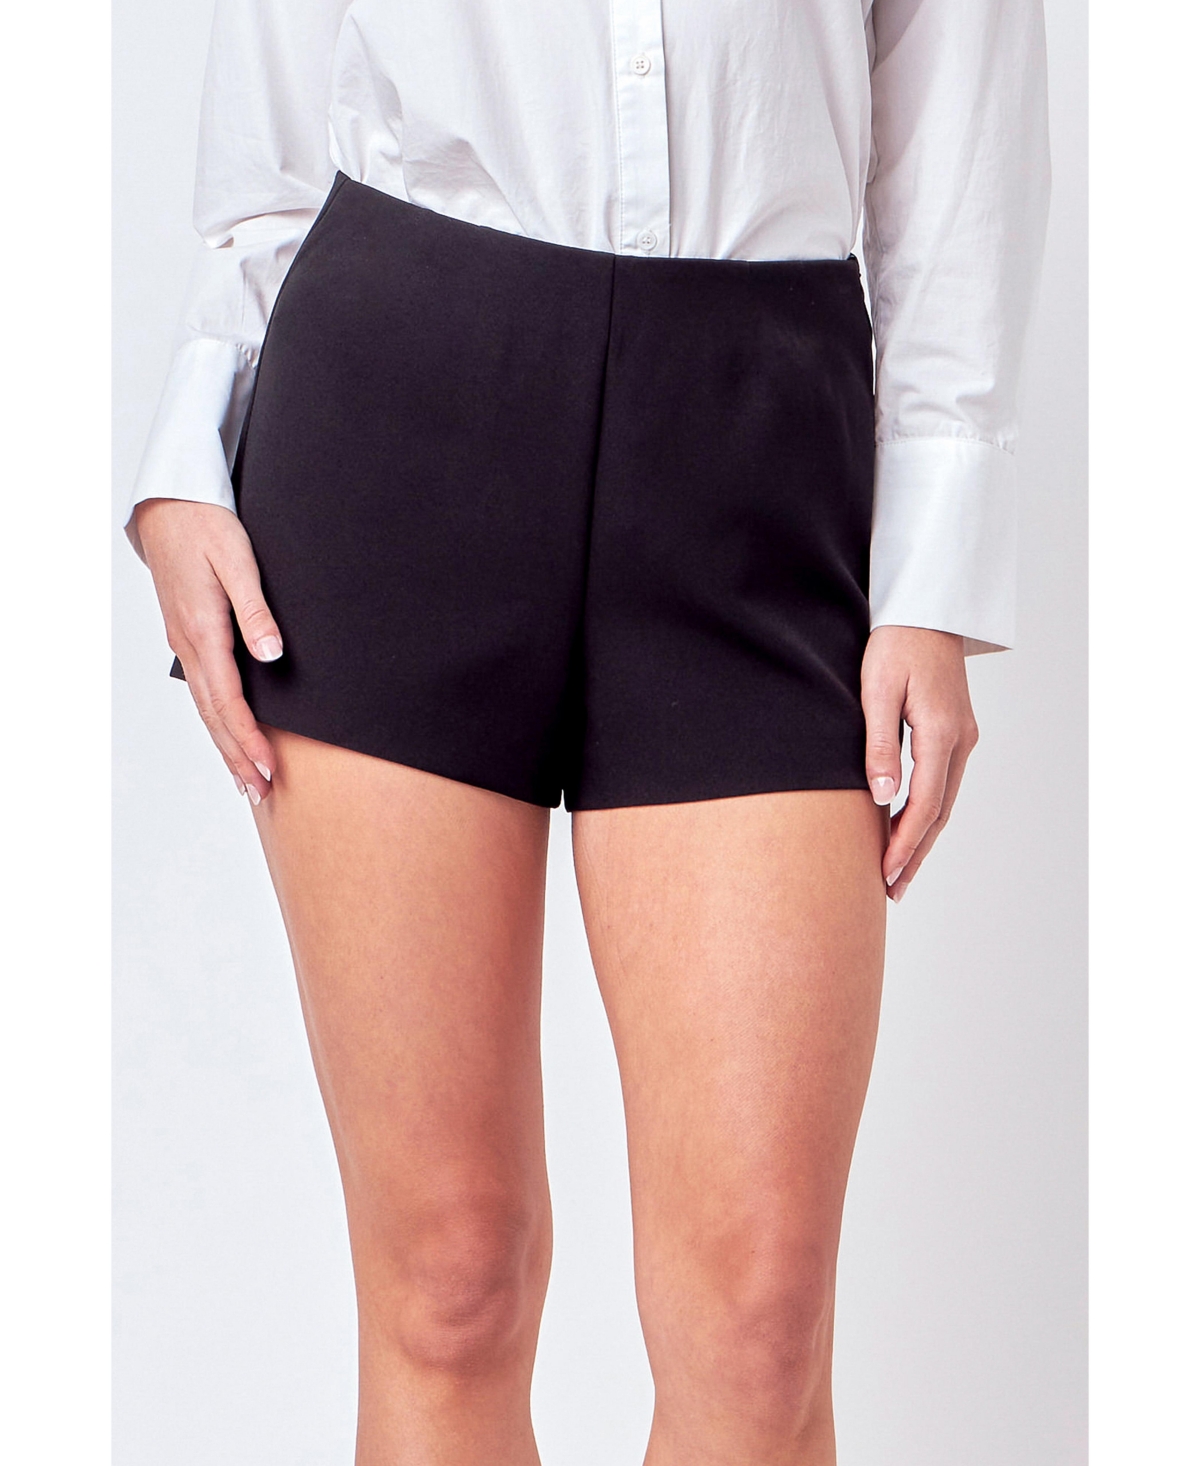 Women's Low-rise Shorts - Black